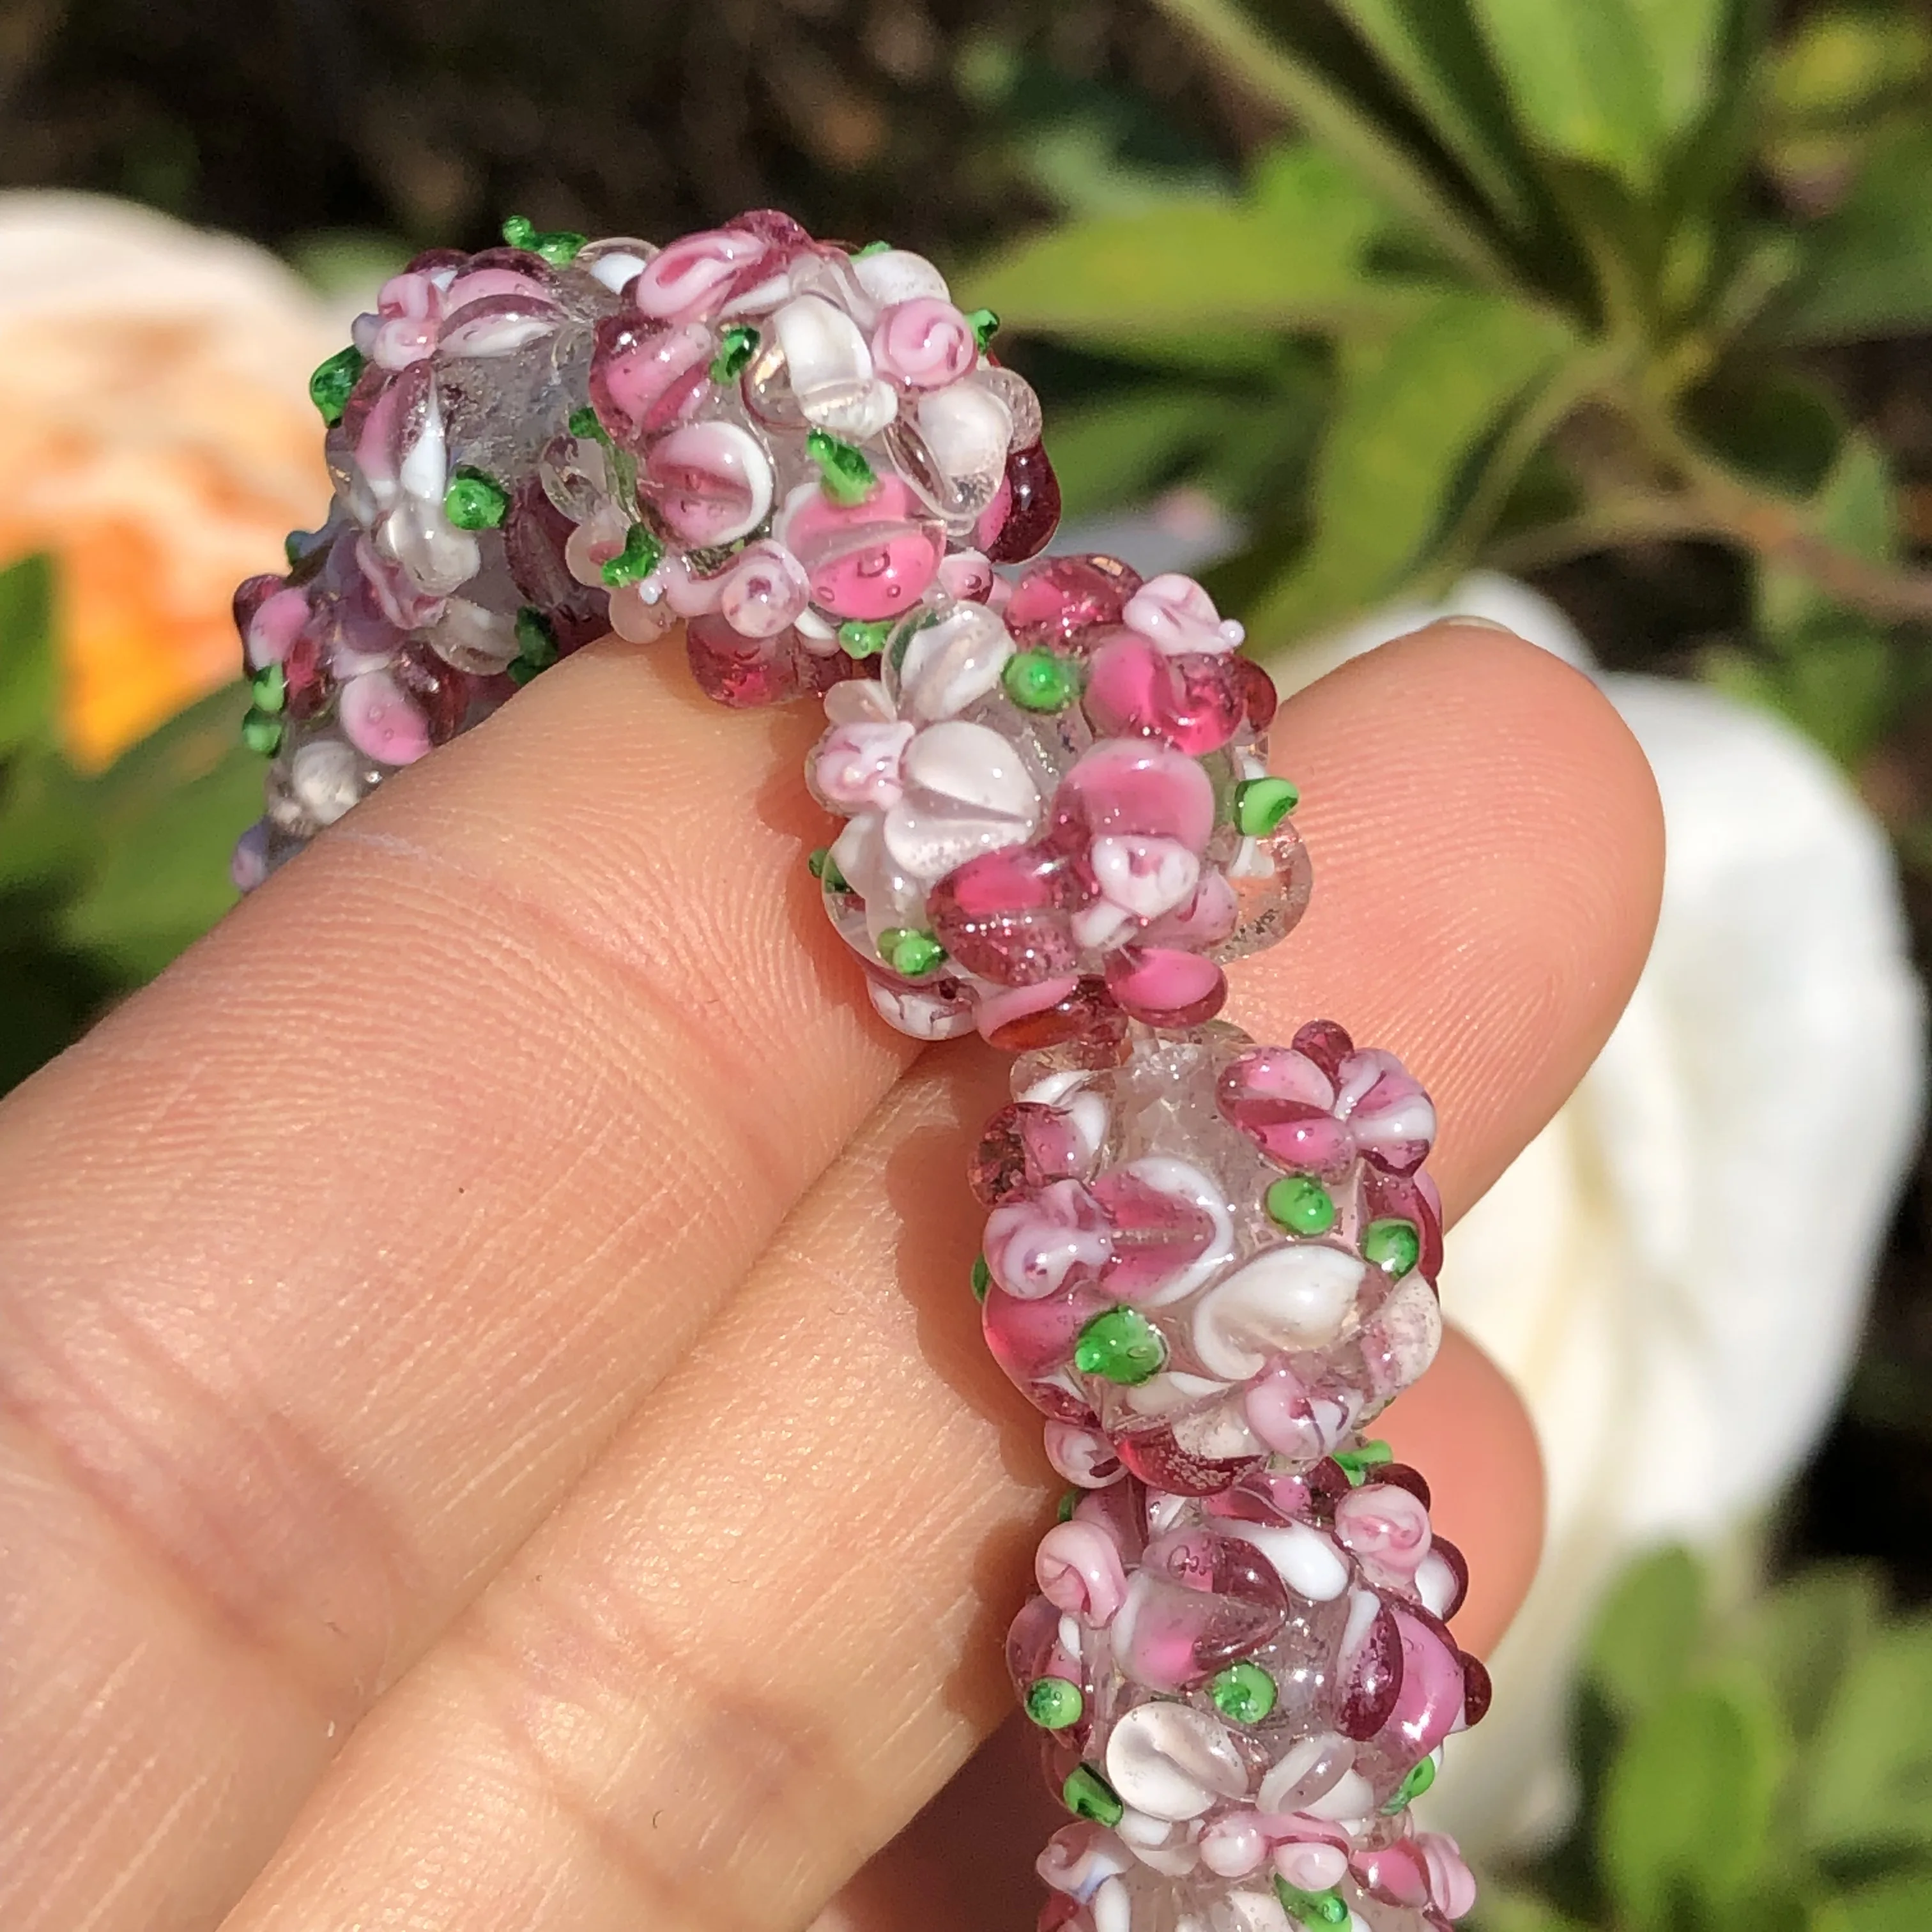 Mix Lot Glass Beads For Bracelet Jewelry Making - Flower Swirl